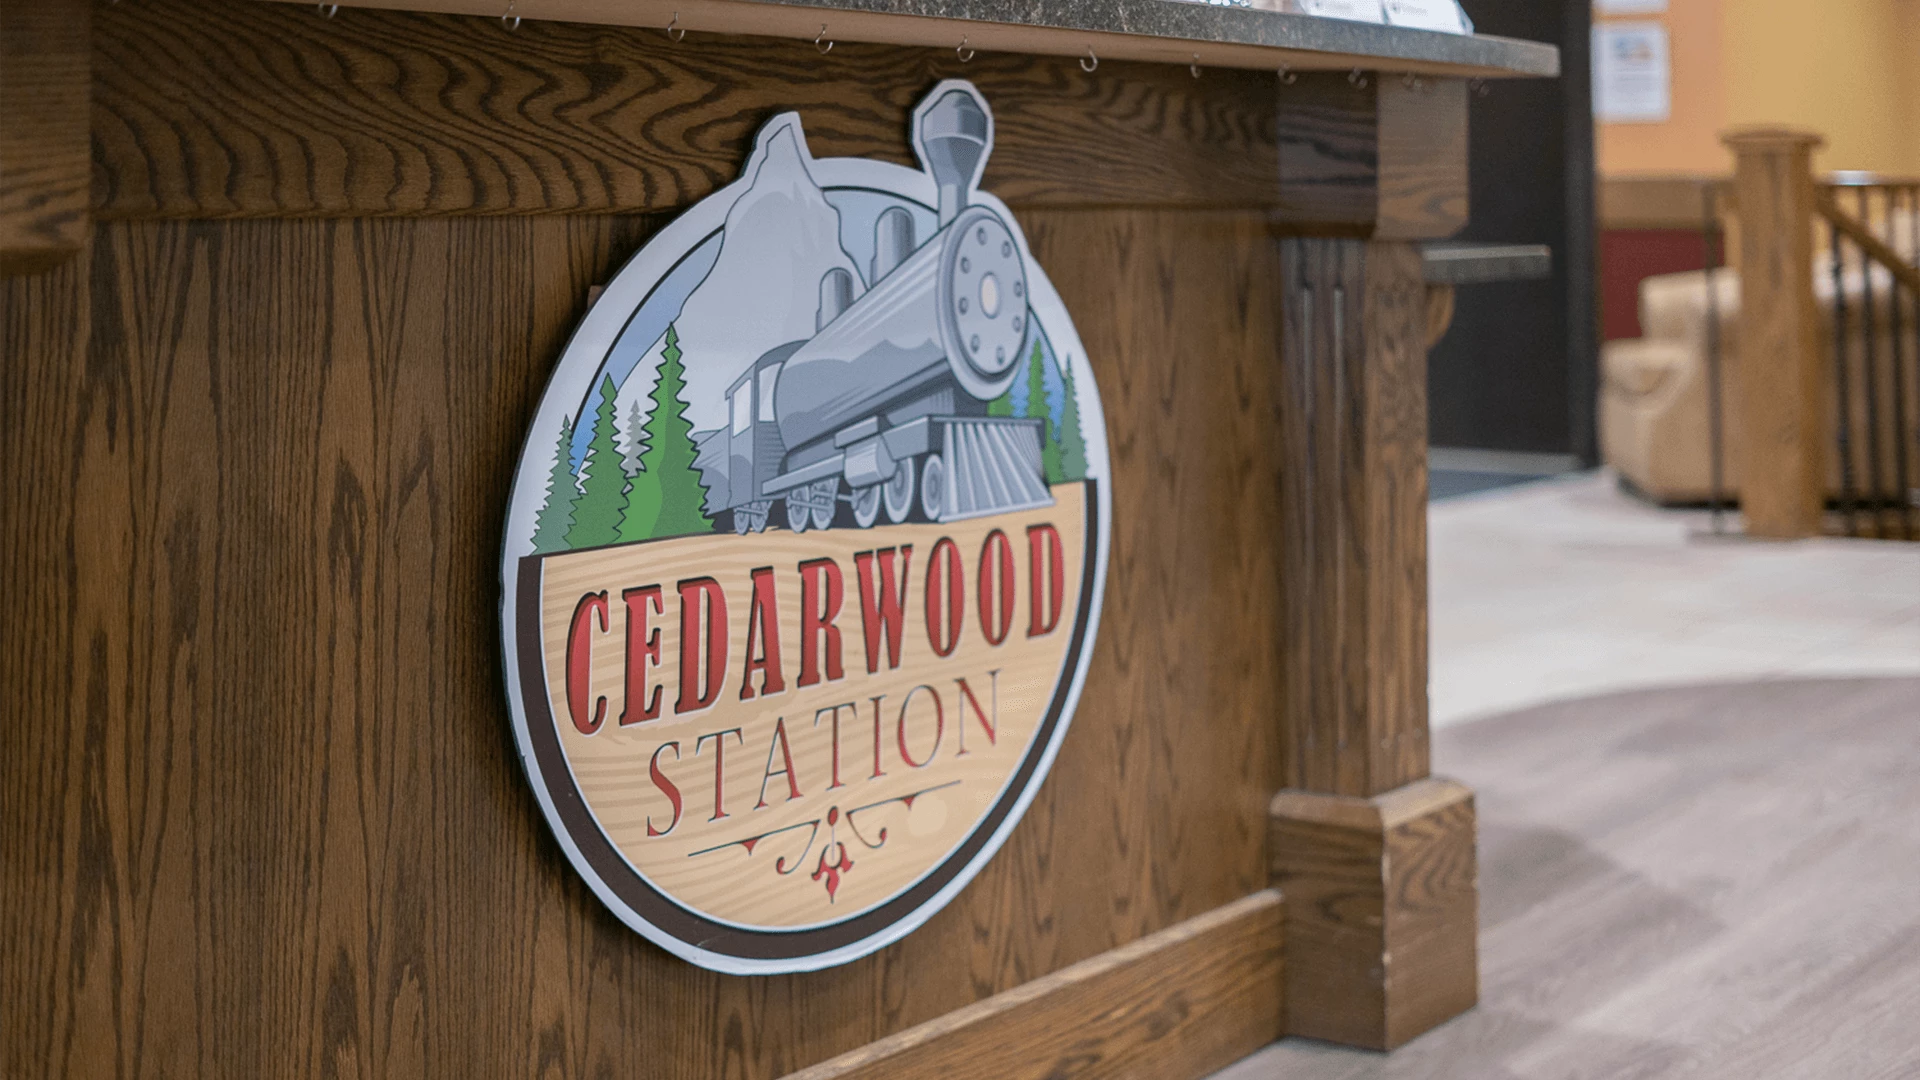 A logo of Cedarwood Station